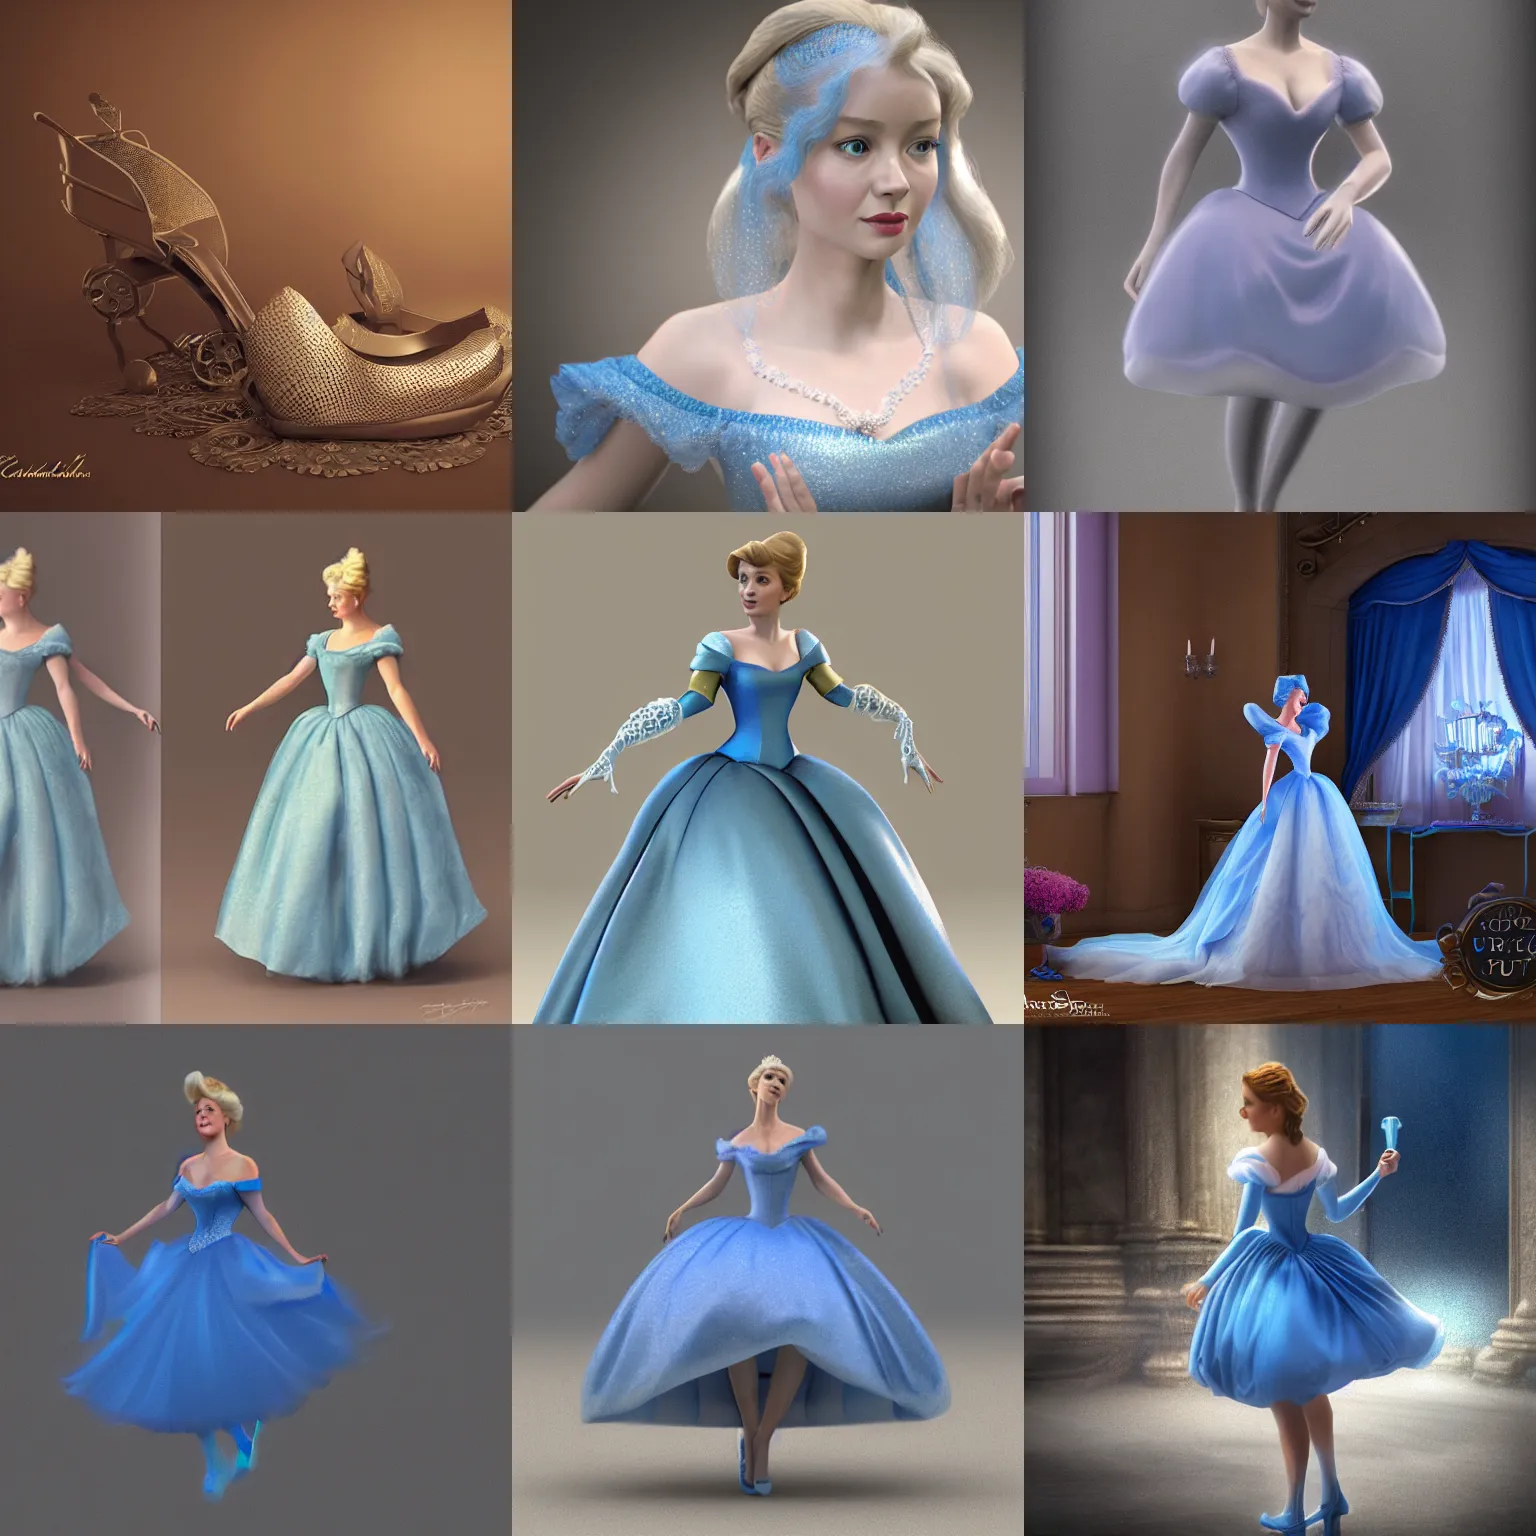 Cinderella | Disney drawings sketches, Disney art drawings, Disney art